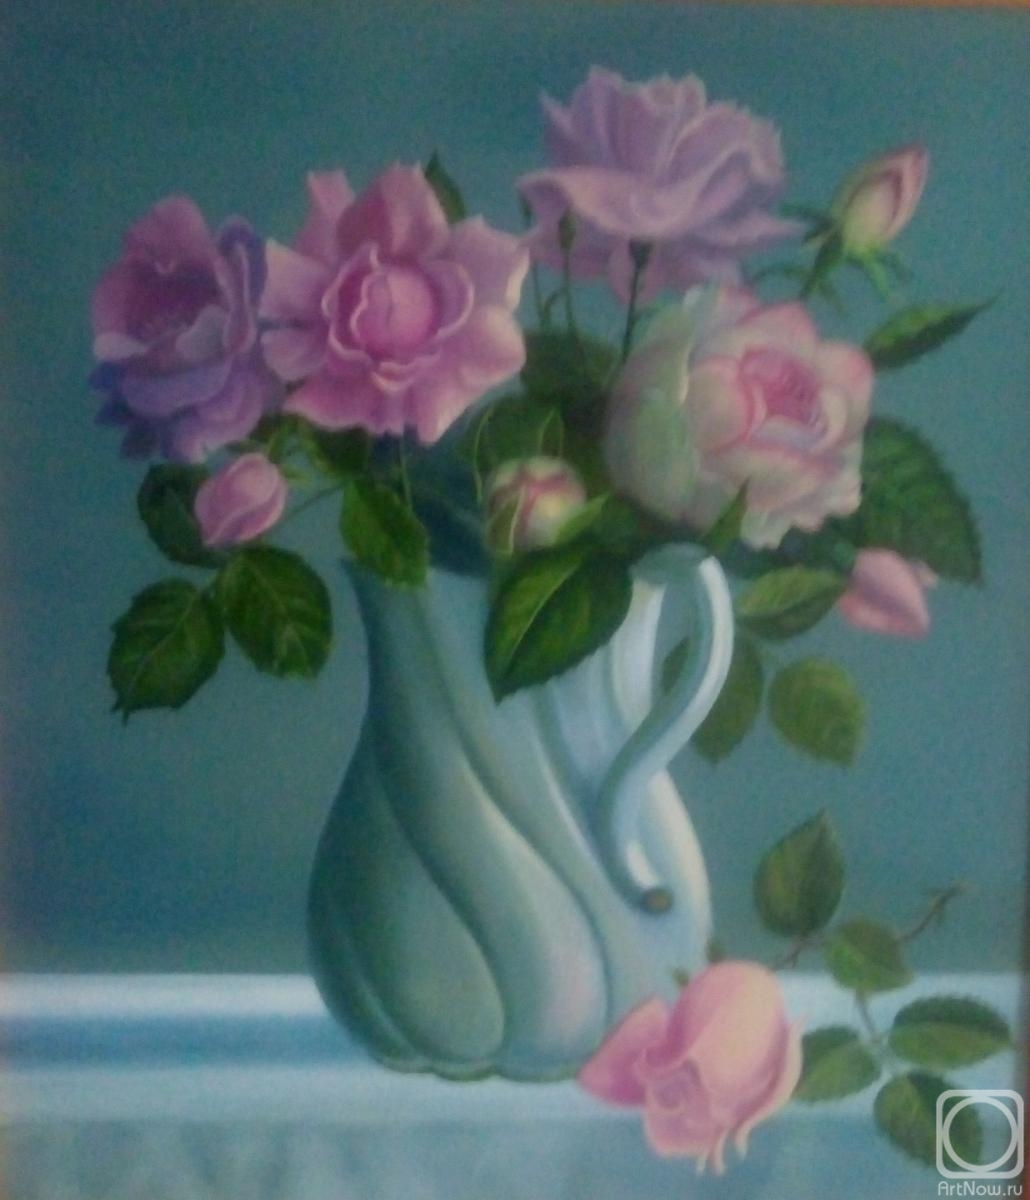 Knyazeva Nina. Tea roses in a vase